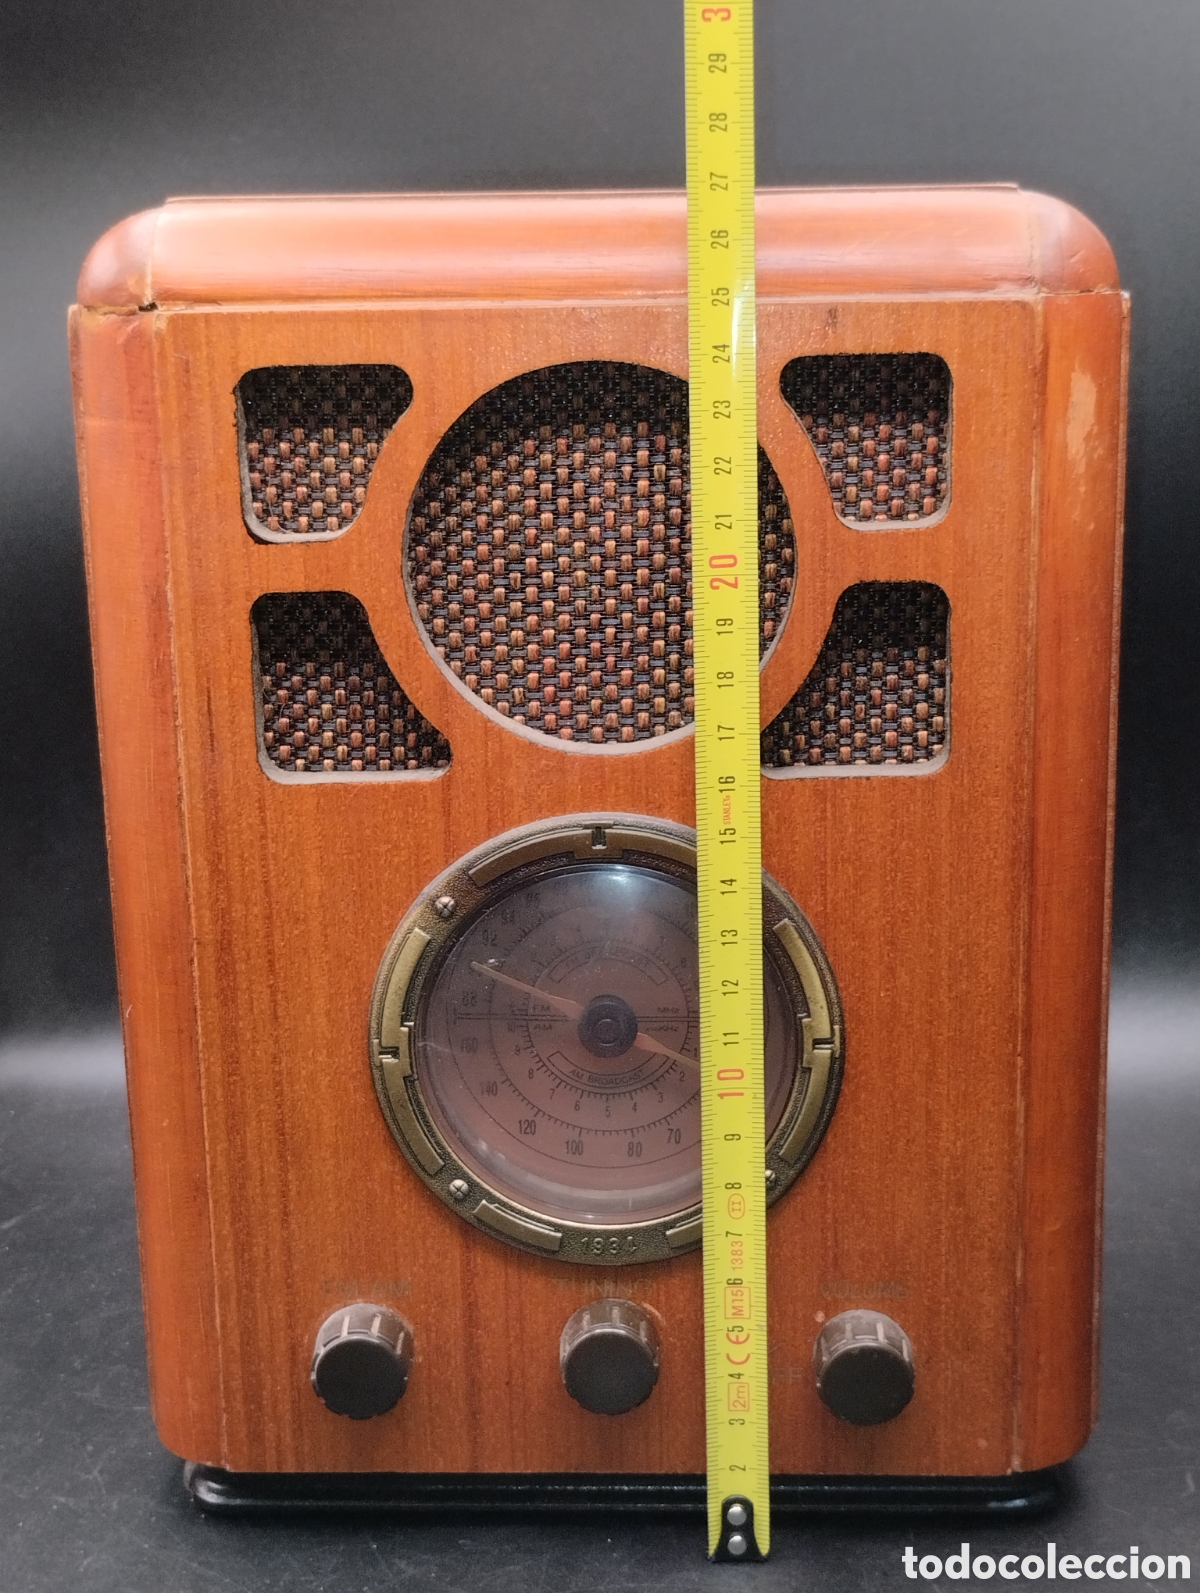 antena emisora imantada vintage - Buy Other vintage objects on todocoleccion